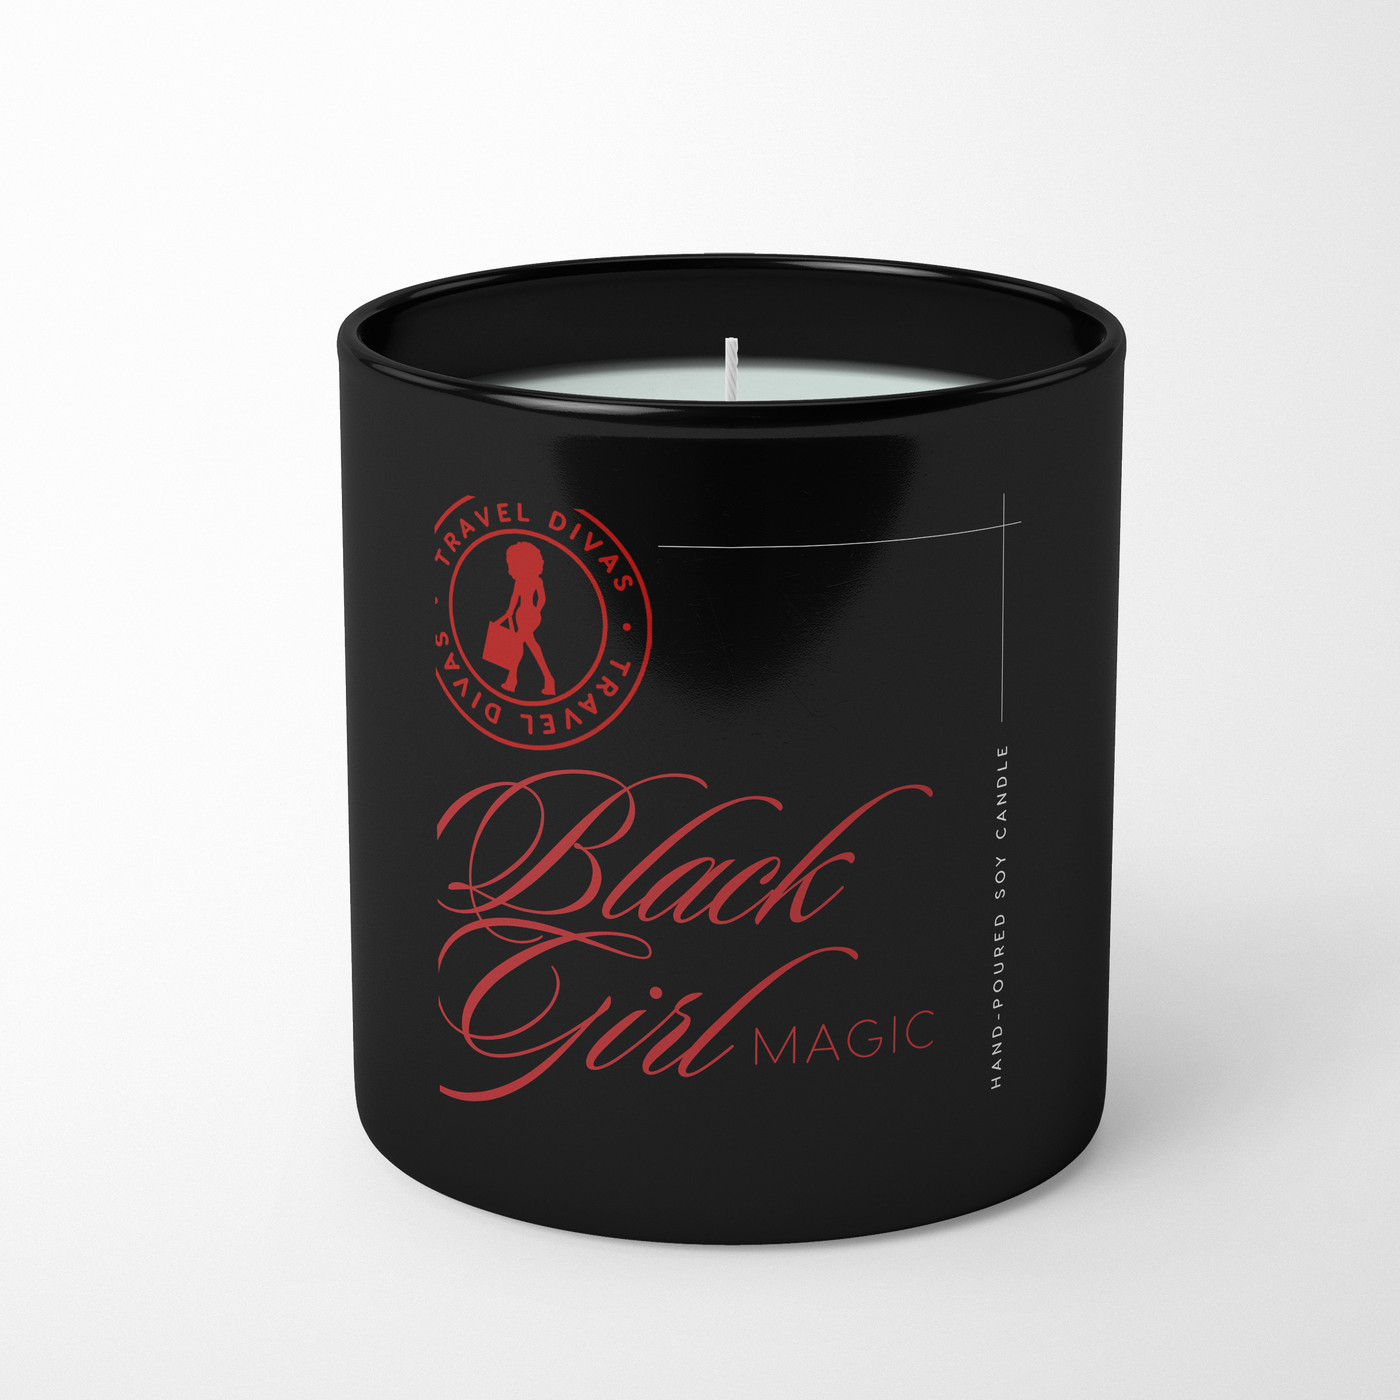 Black Girl Magic Luxury Candle, Black Vessel, 11oz.